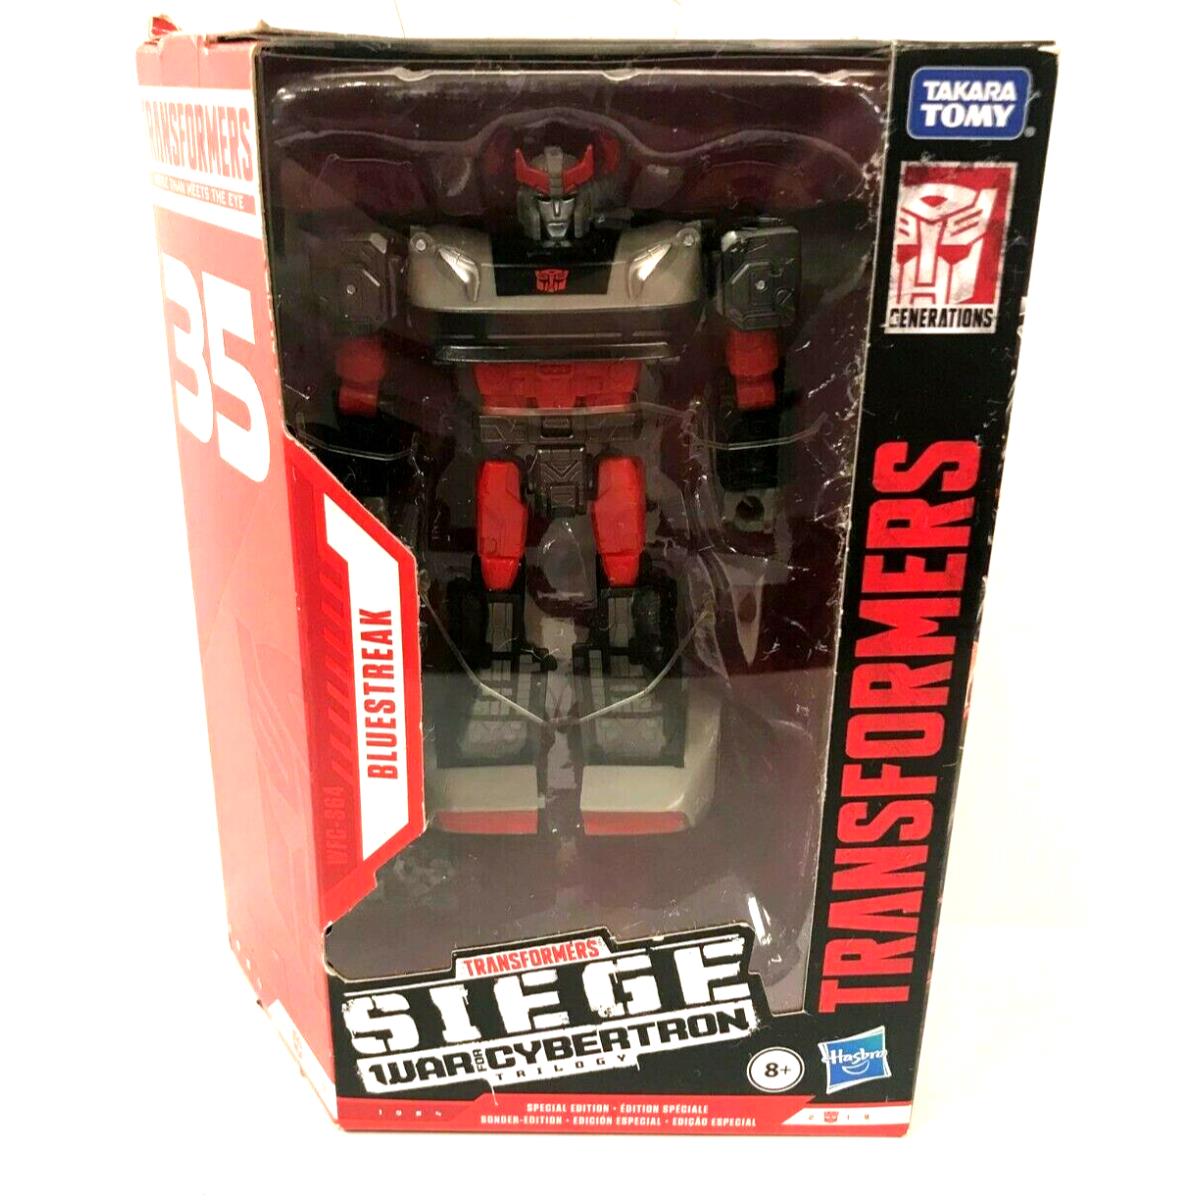 Transformers 35th Siege War For Cybertron Trilogy Bluestreak Action Figure Toy